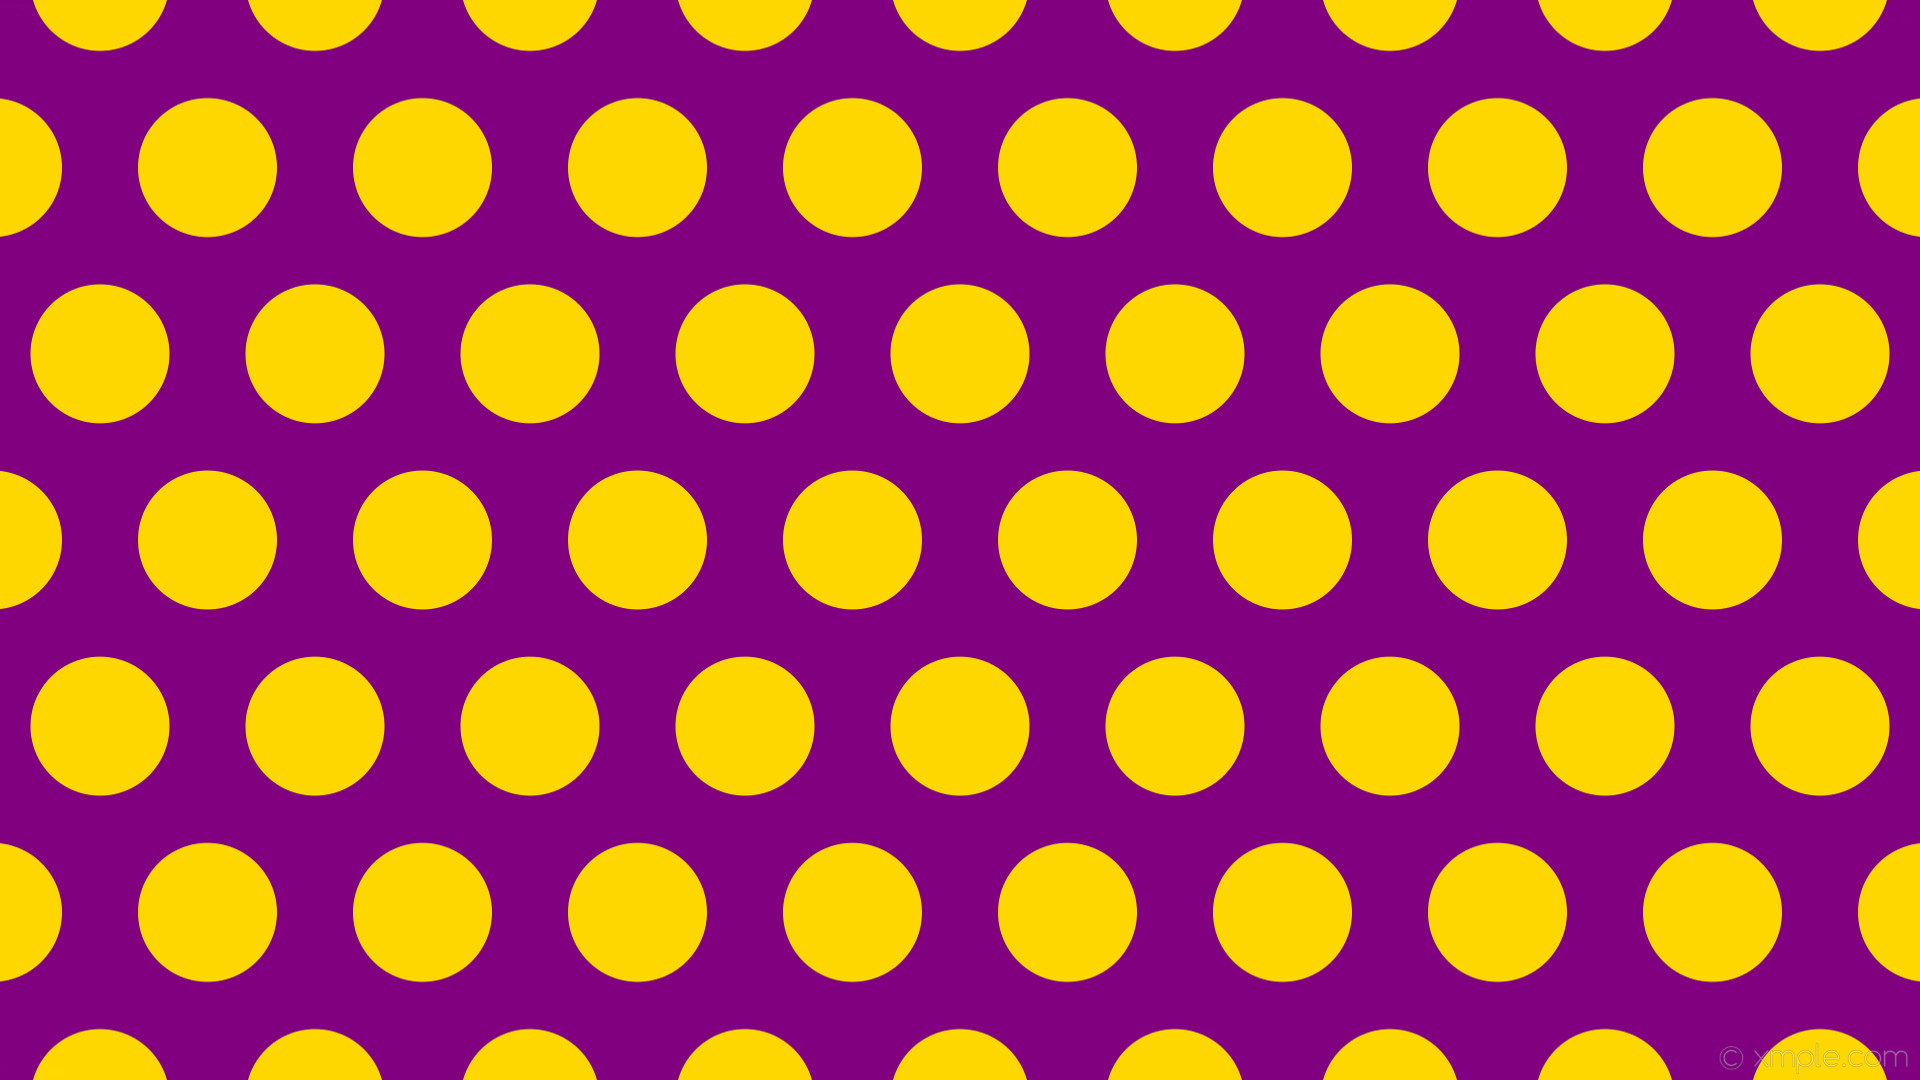 1920x1080 wallpaper yellow hexagon purple polka dots gold #800080 #ffd700 0Â° 139px  215px